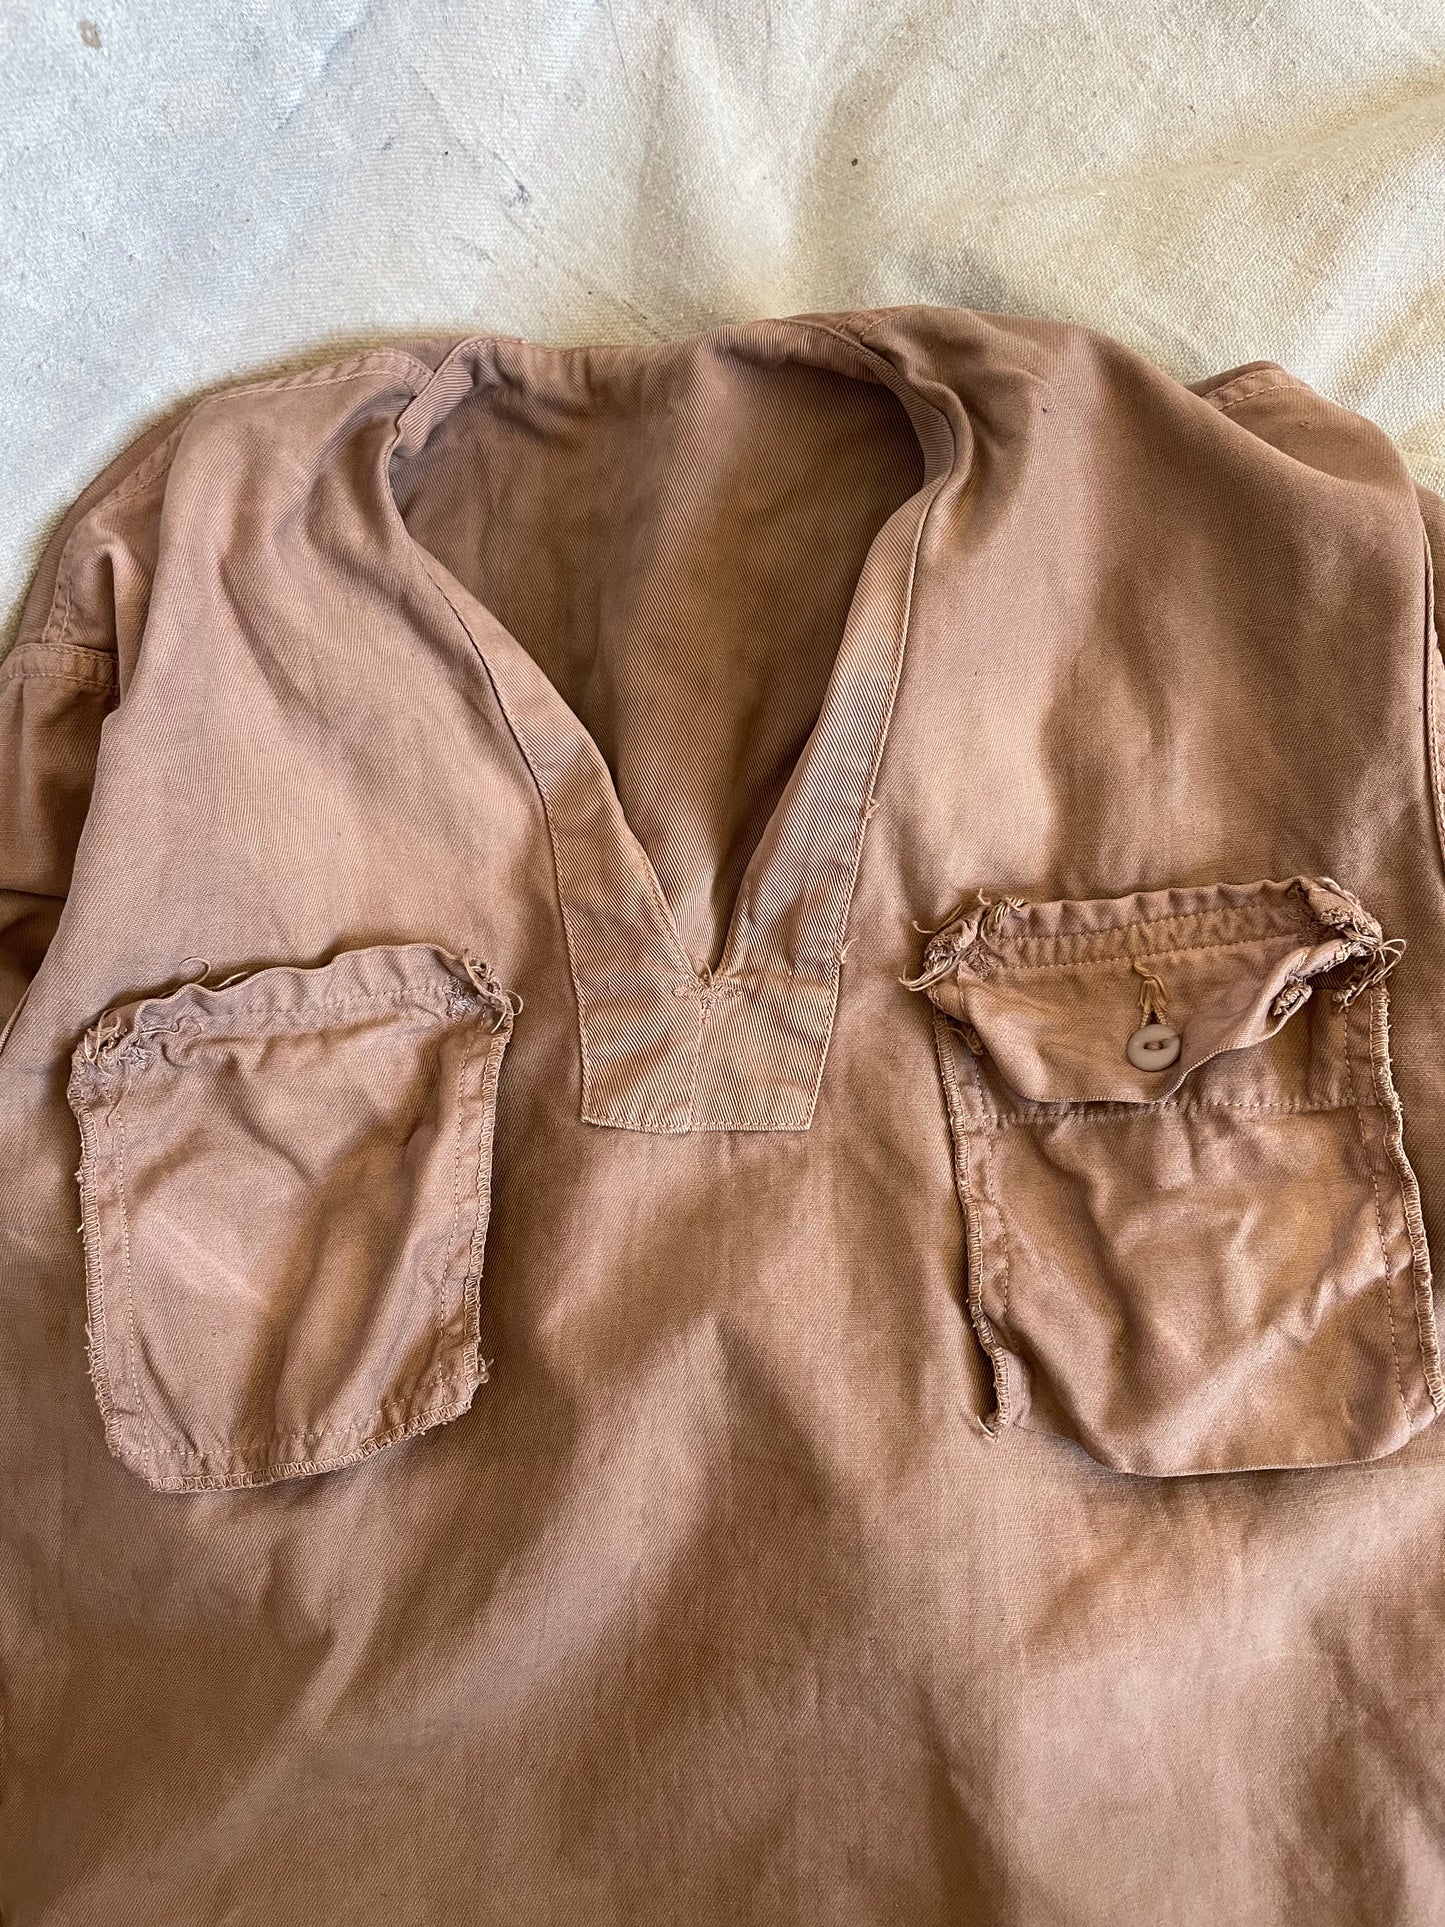 40s/50s Overdyed USN Undress Service Uniform Top